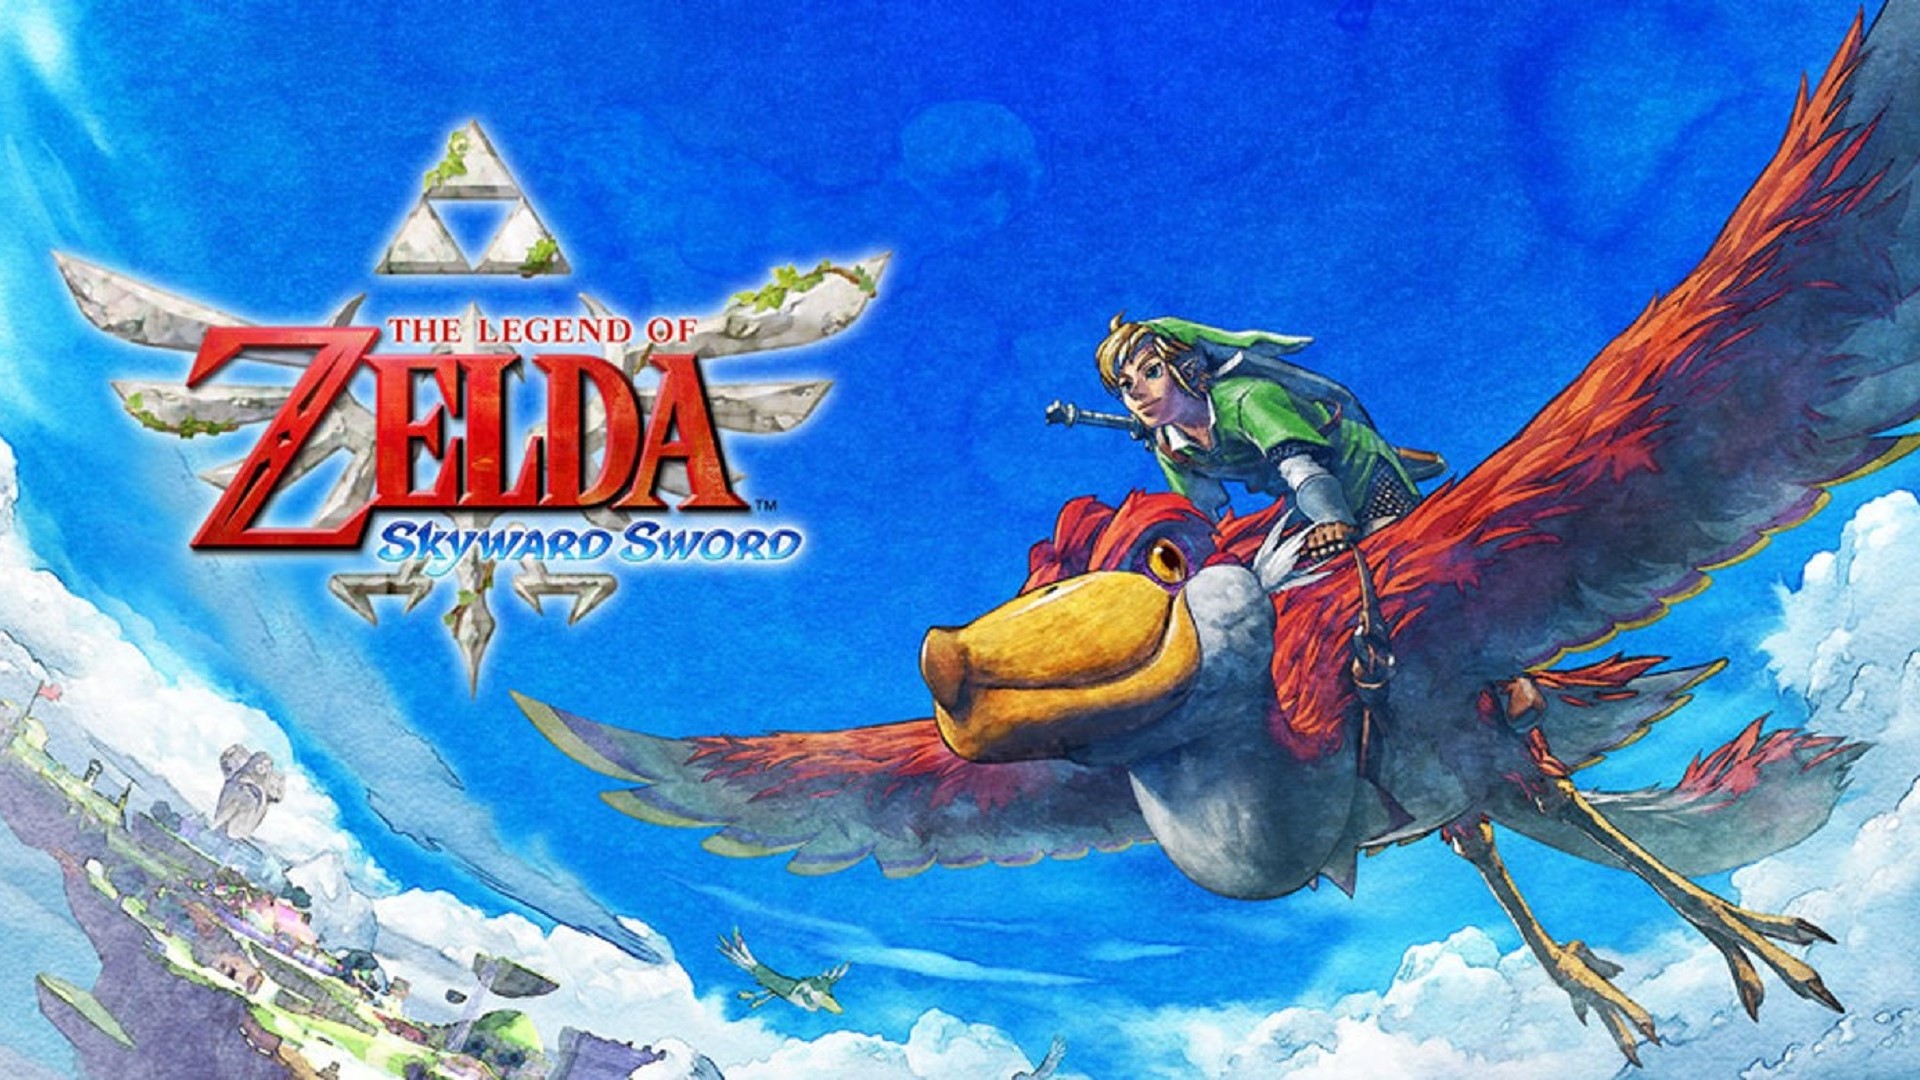 La leggenda di Zelda Skyward Sword